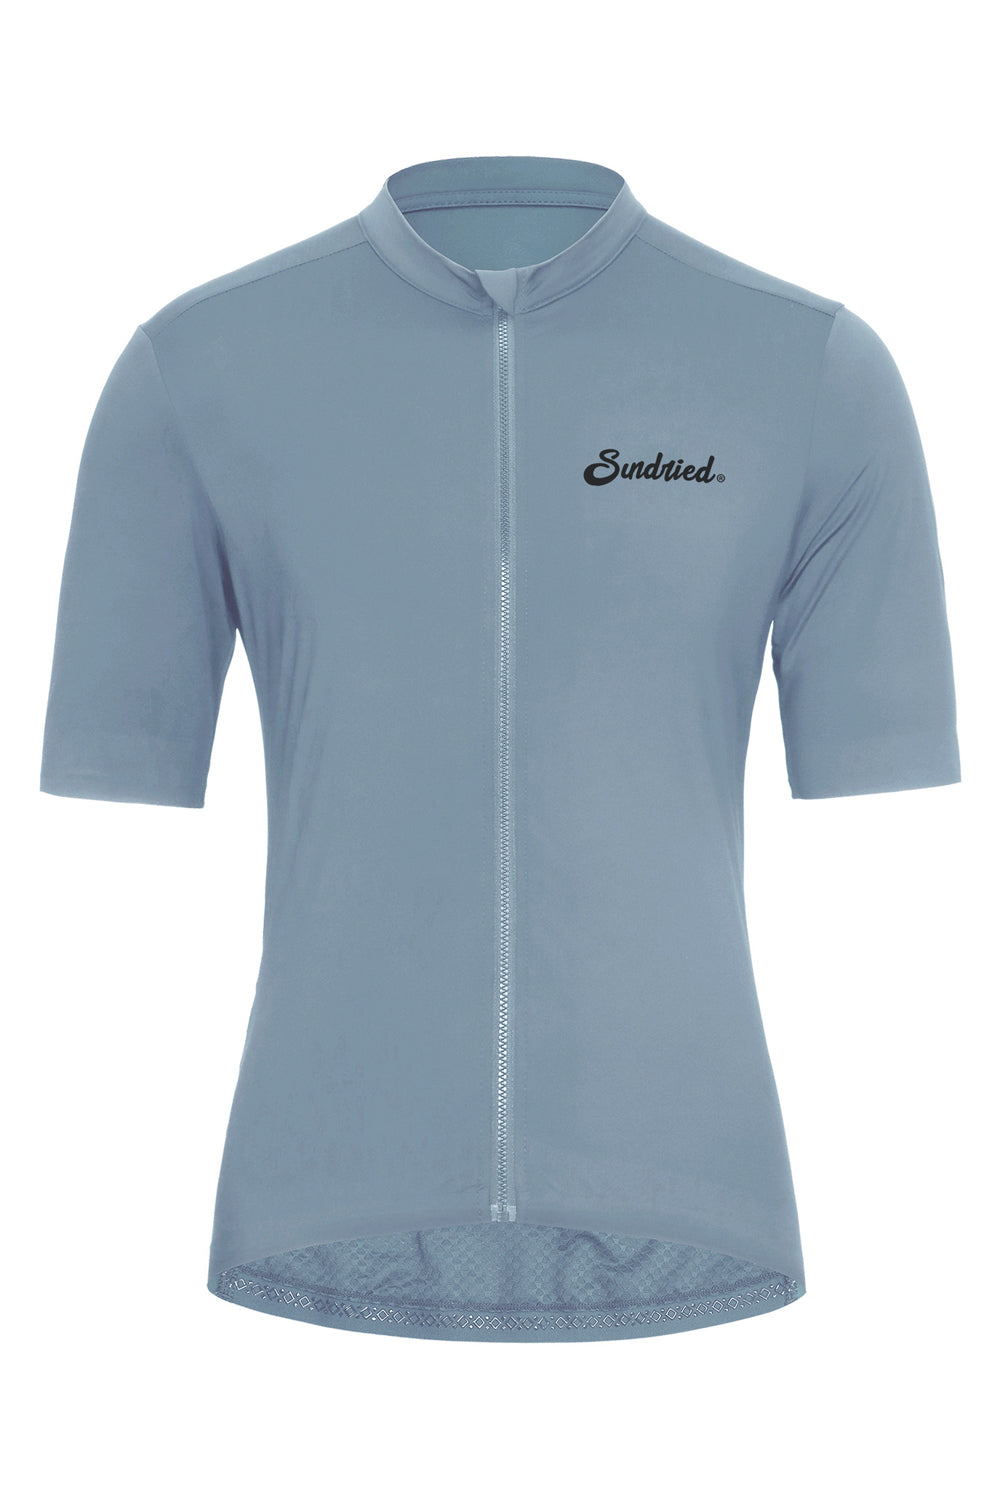 Sundried Sport Pianura Men's Grey Short Sleeve Cycle Jersey Short Sleeve Jersey S SS1001 S Grey Activewear